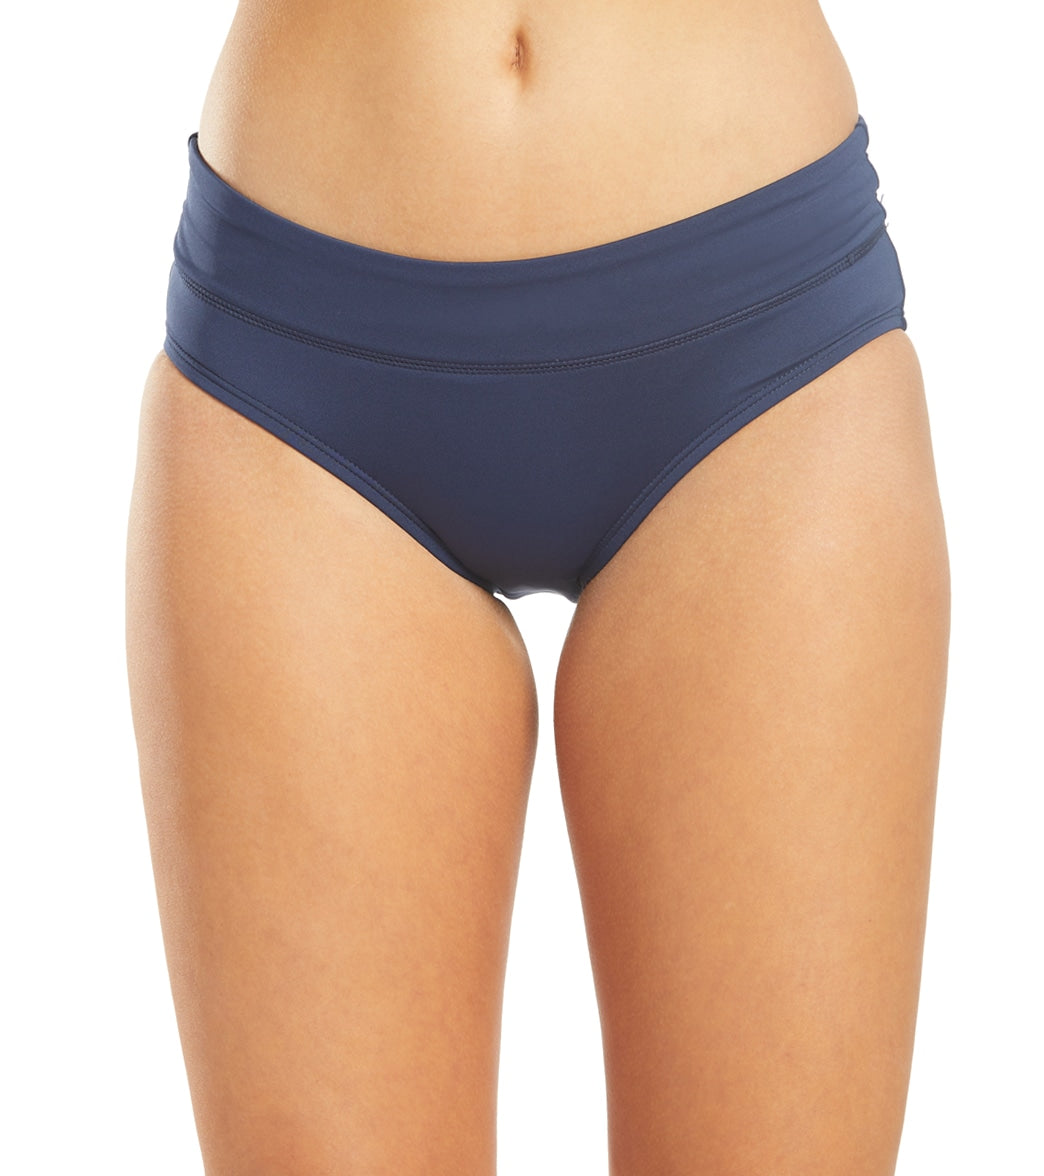 Nike Women's Essential Full Bikini Bottom at SwimOutlet.com